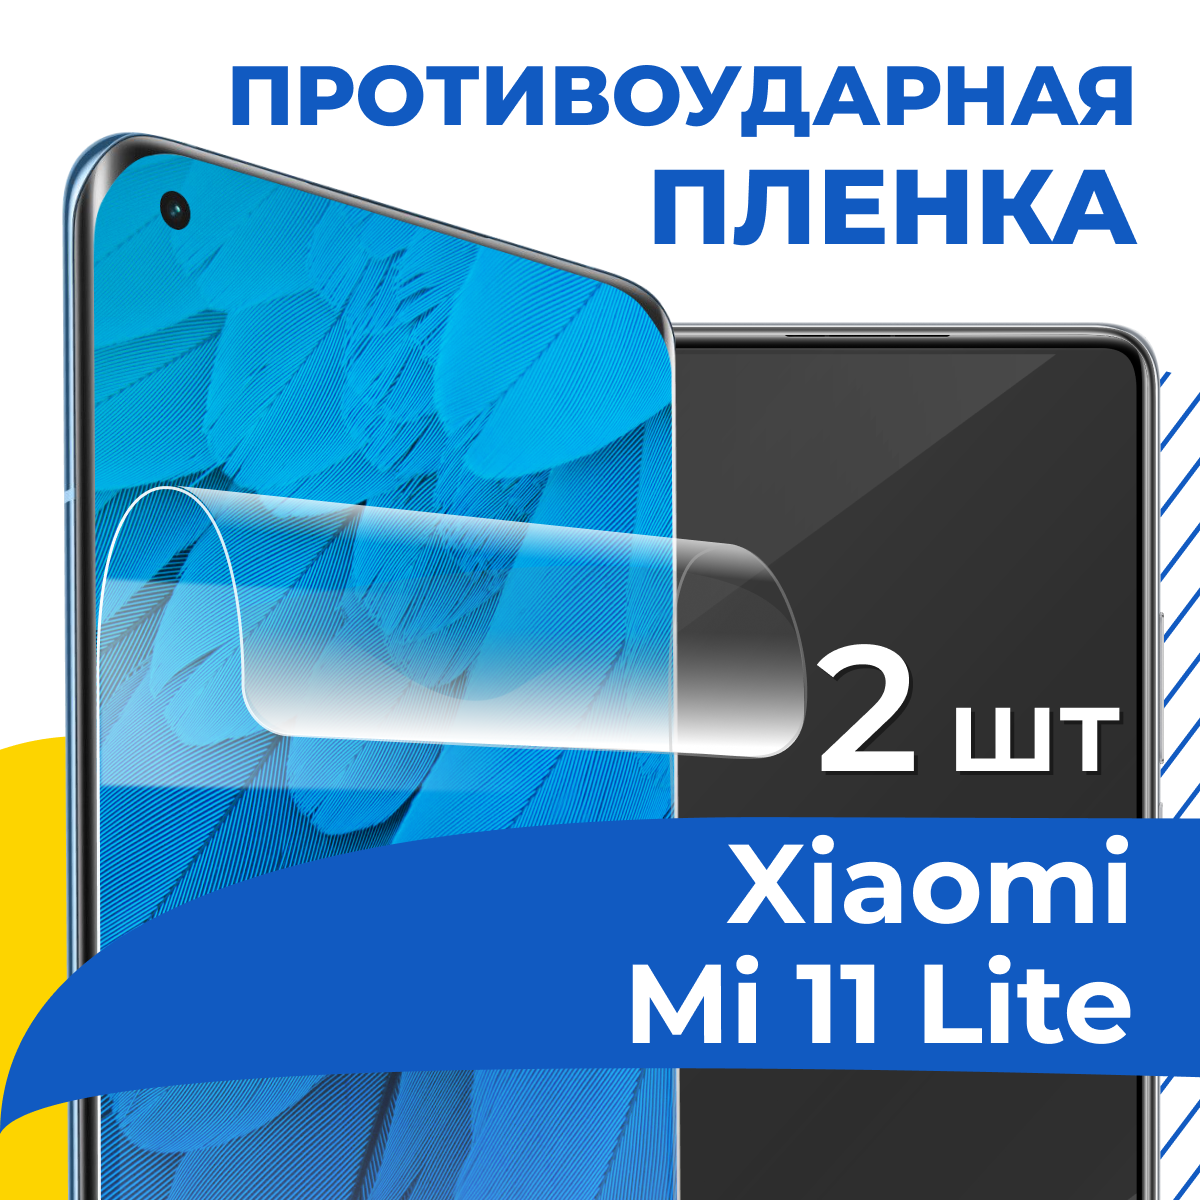 Комплект 2 шт. Гидрогелевая пленка для Xiaomi Mi 11 Lite / Противоударная защитная пленка на смартфон Сяоми Ми 11 Лайт / Самовосстанавливающаяся пленка